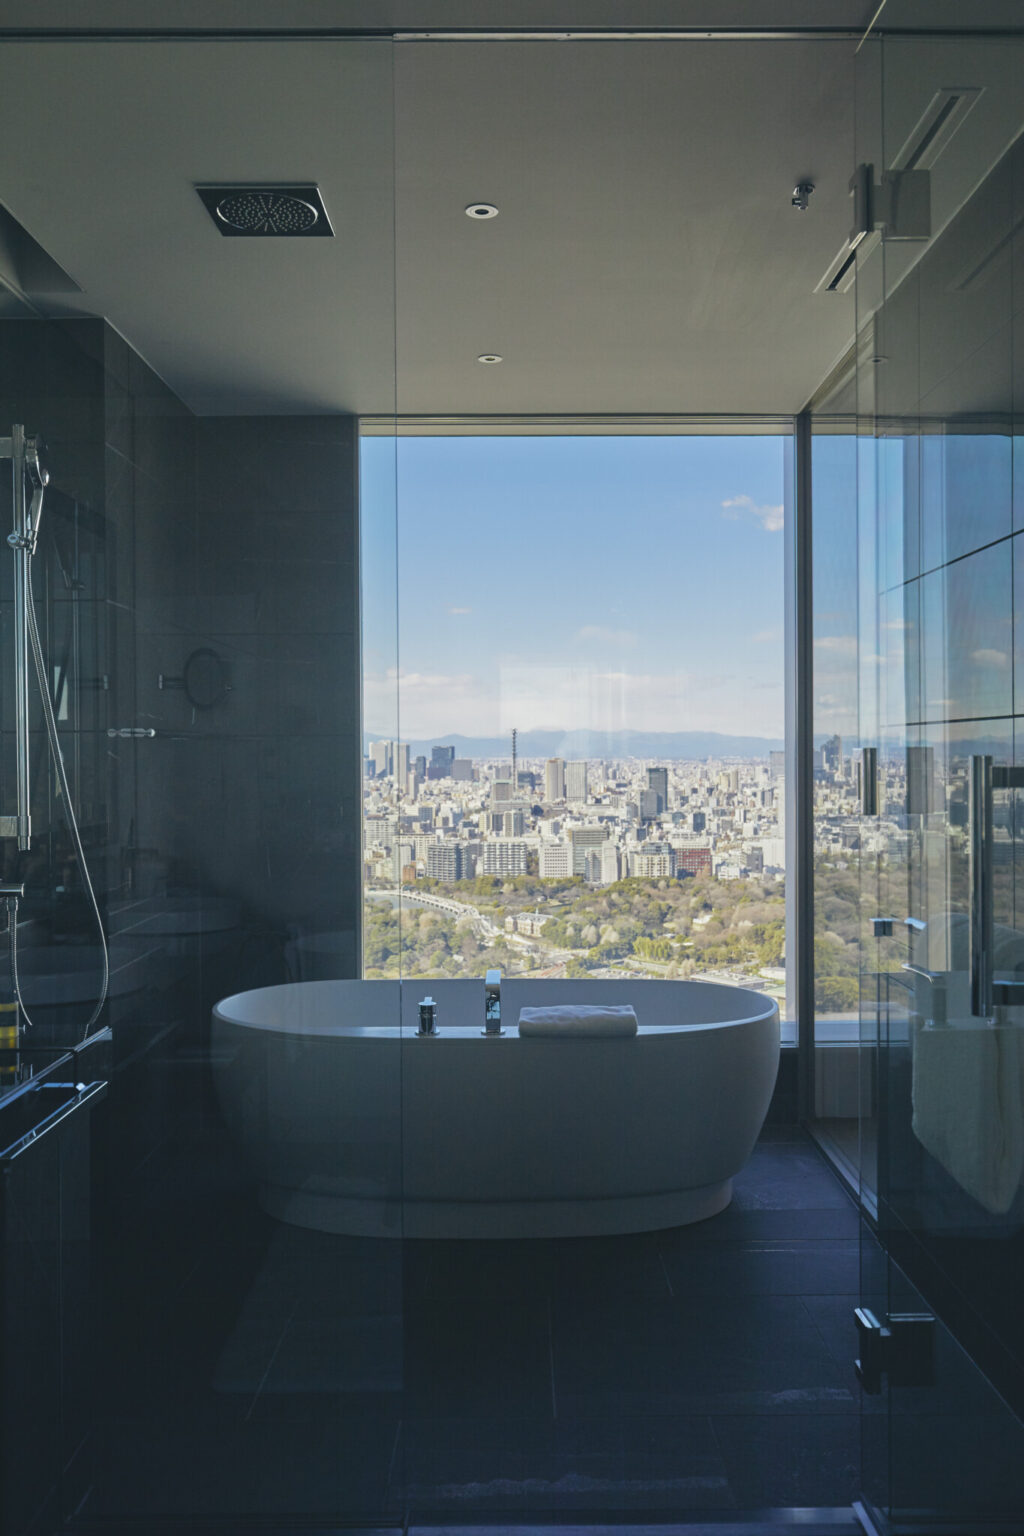 【BATHROOM】絶景風呂で心身をリフレッシュ。ガラス窓一面に広がる東京の絶景が、開放感抜群なビューバス。周りに高い建物がないから、リラックスしてバスタイムを楽しめる。